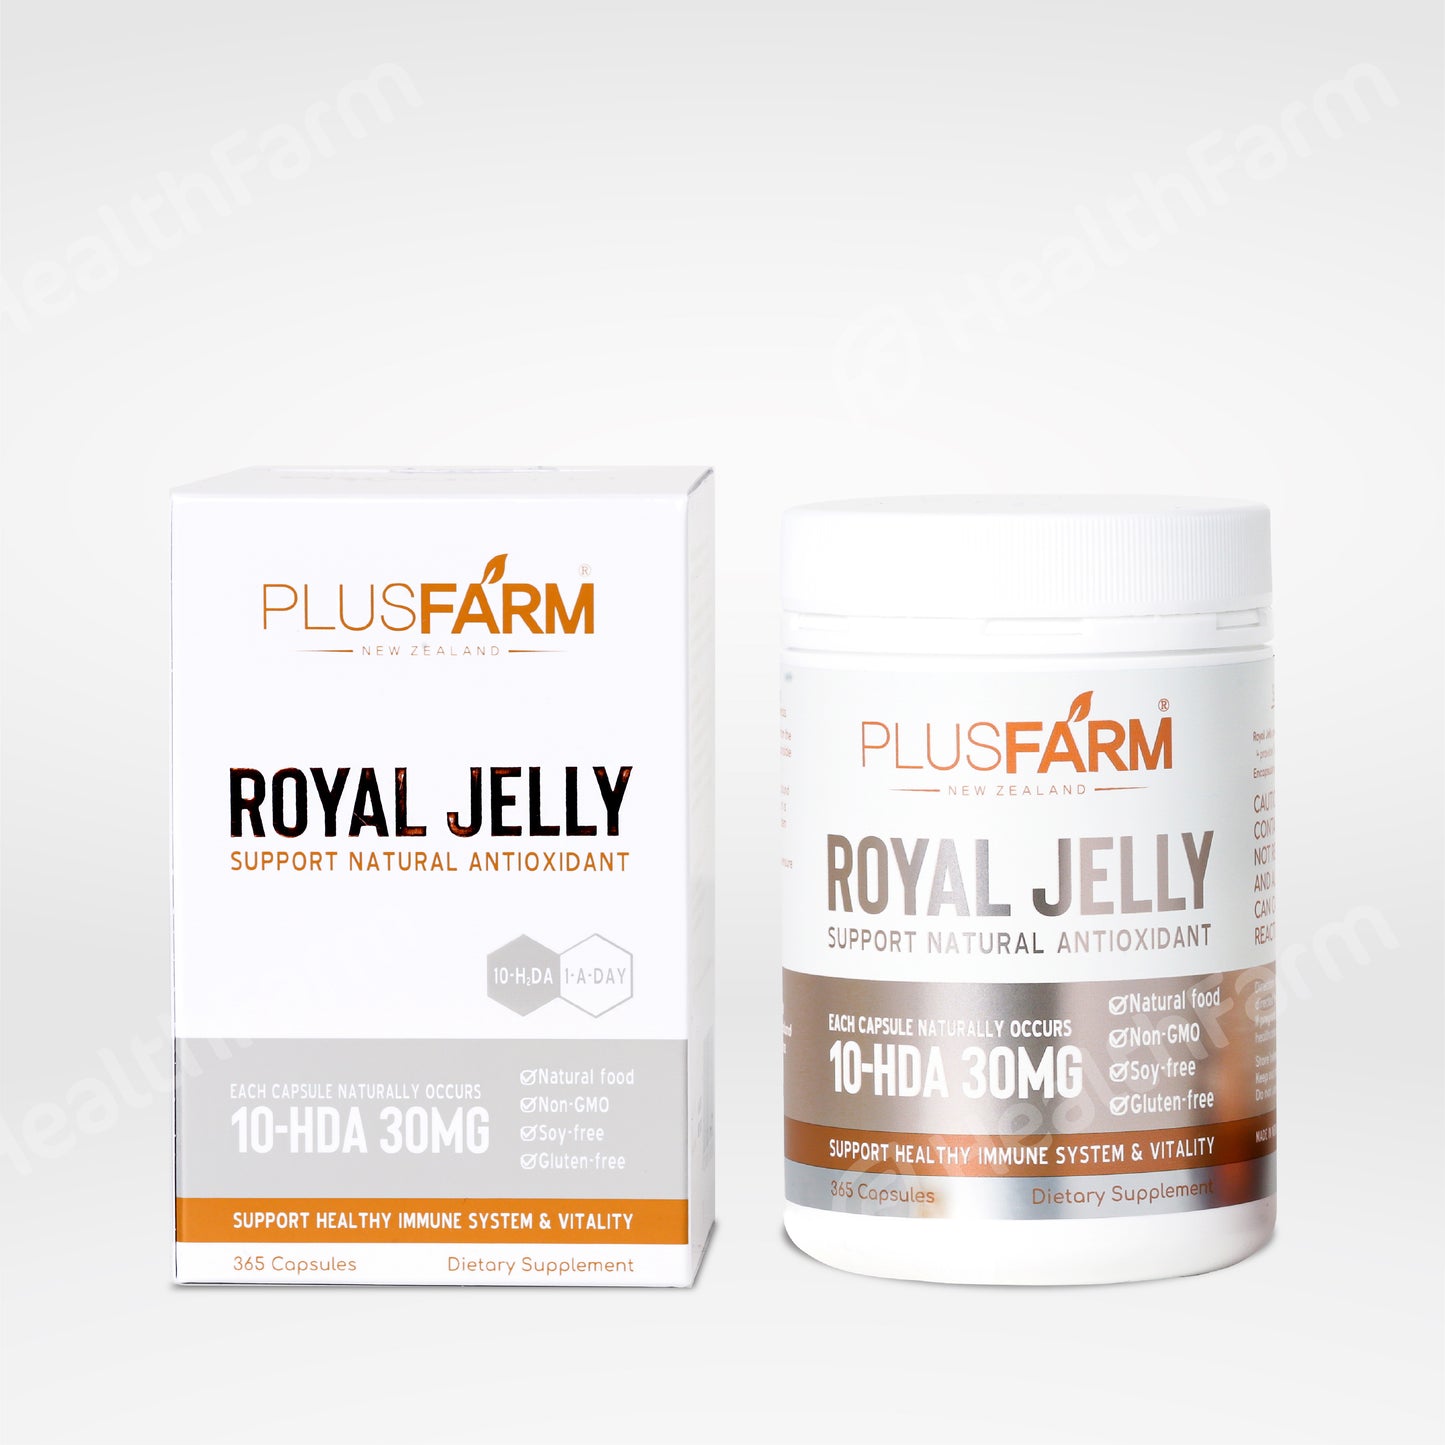 Royal Jelly 100% Pure Royal Jelly 500mg